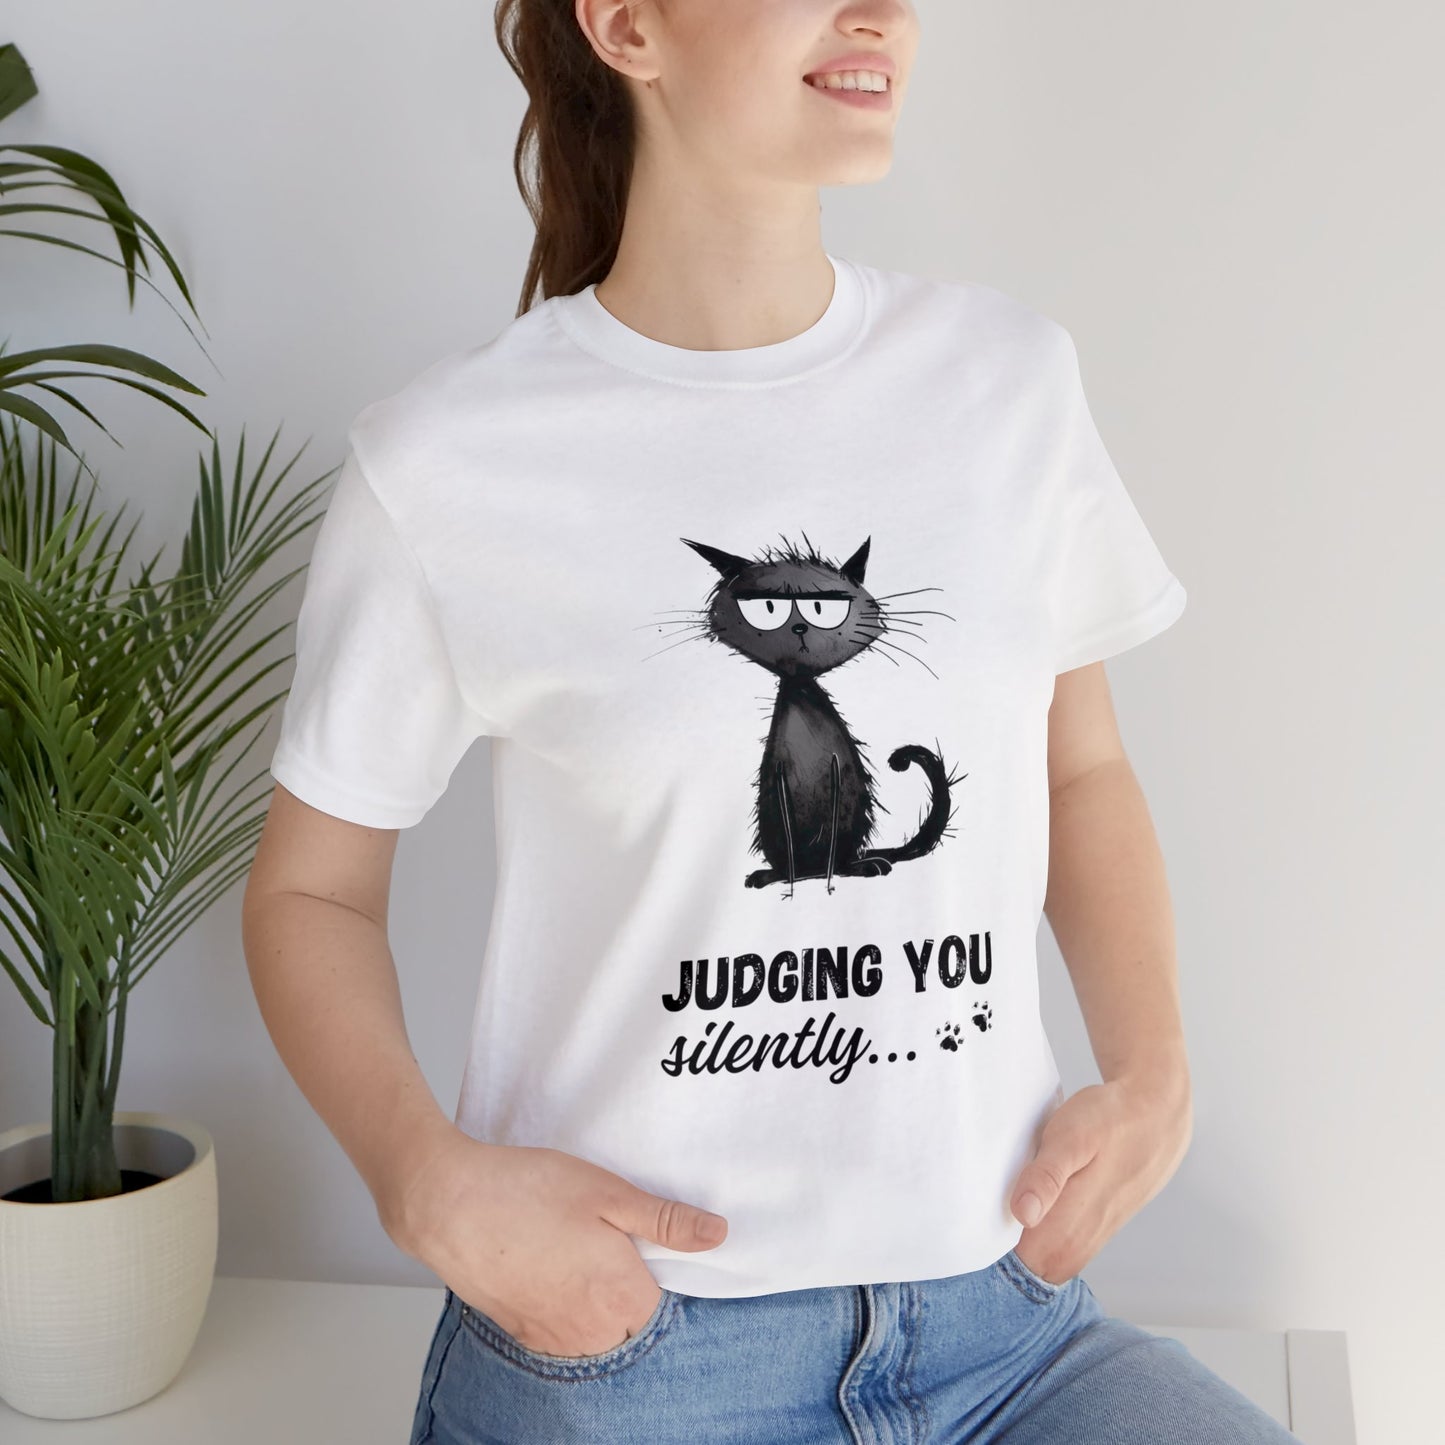 Judging you silently | Unisex T-shirt